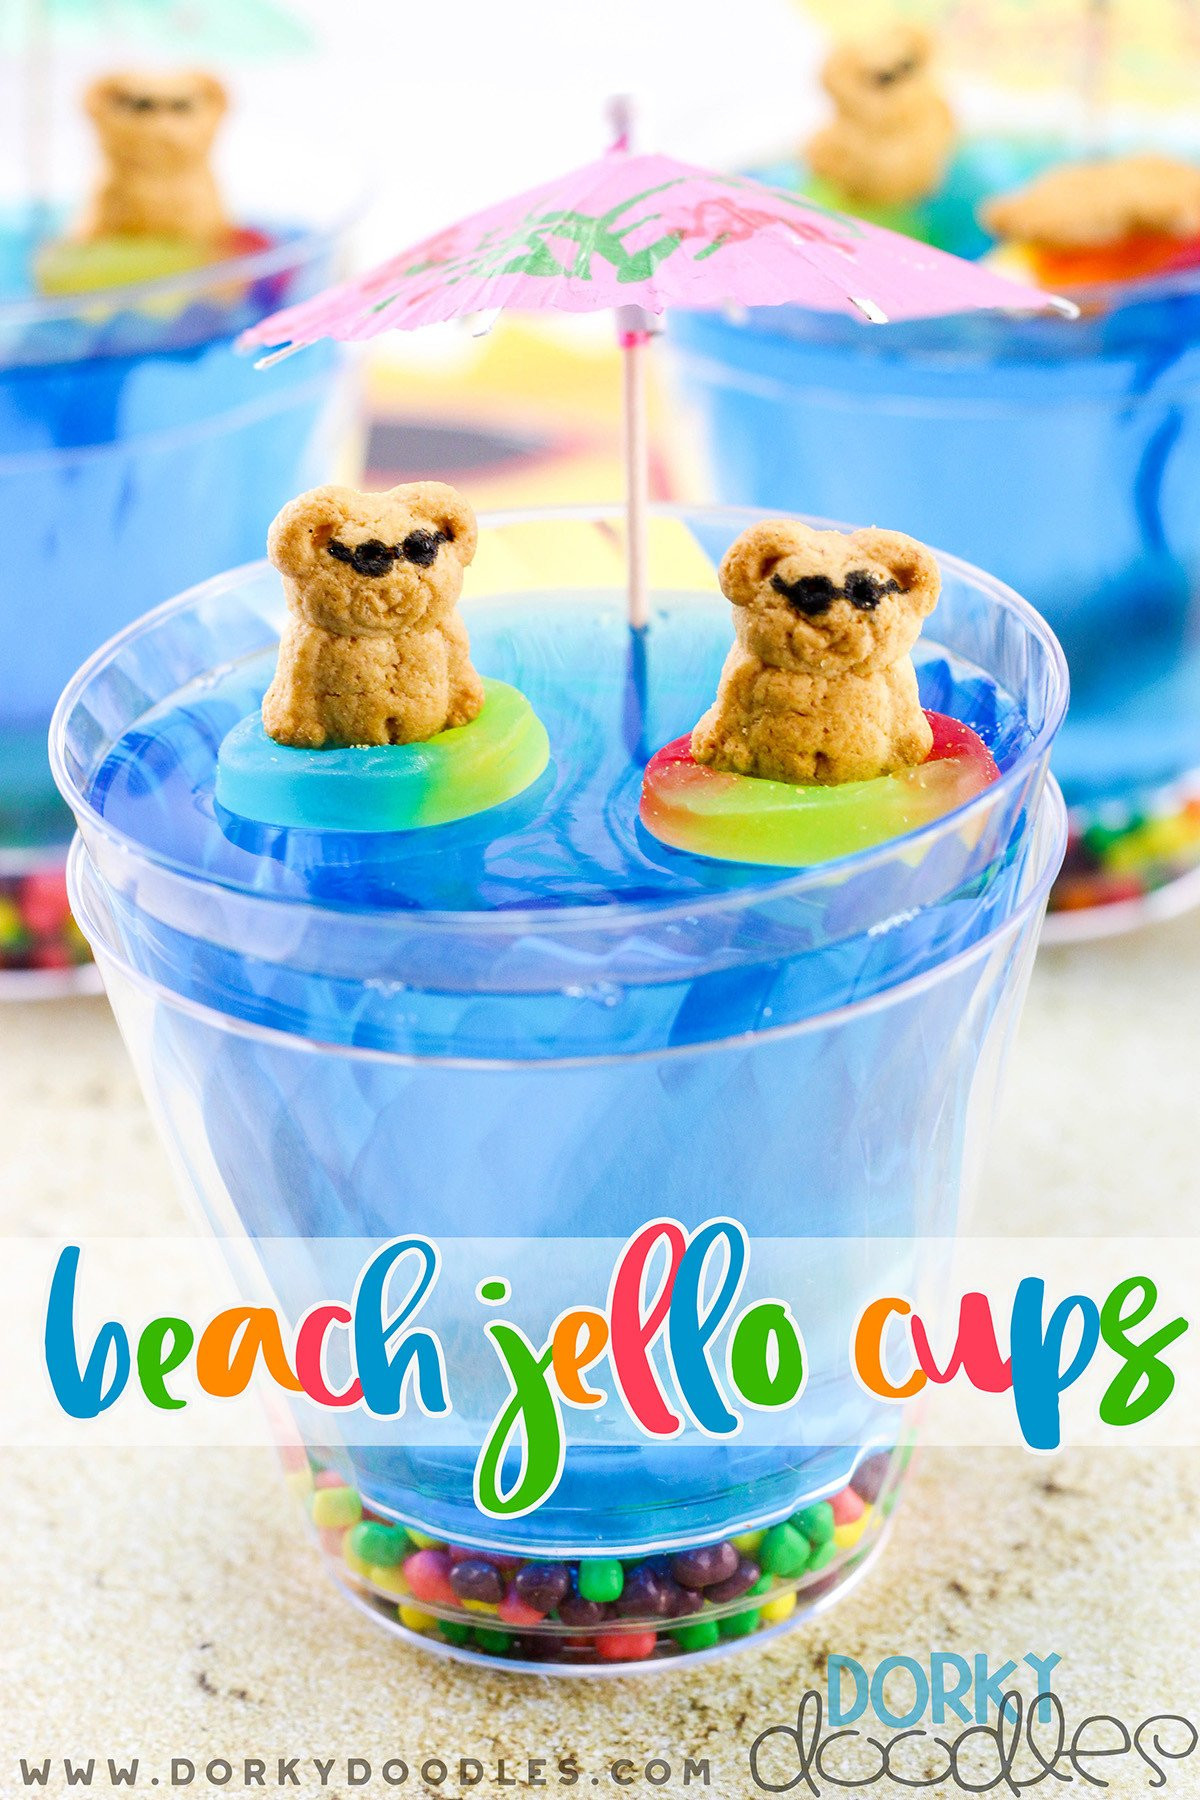 60S Beach Party Food Ideas
 Beach Party Jello Cup Snacks – Dorky Doodles